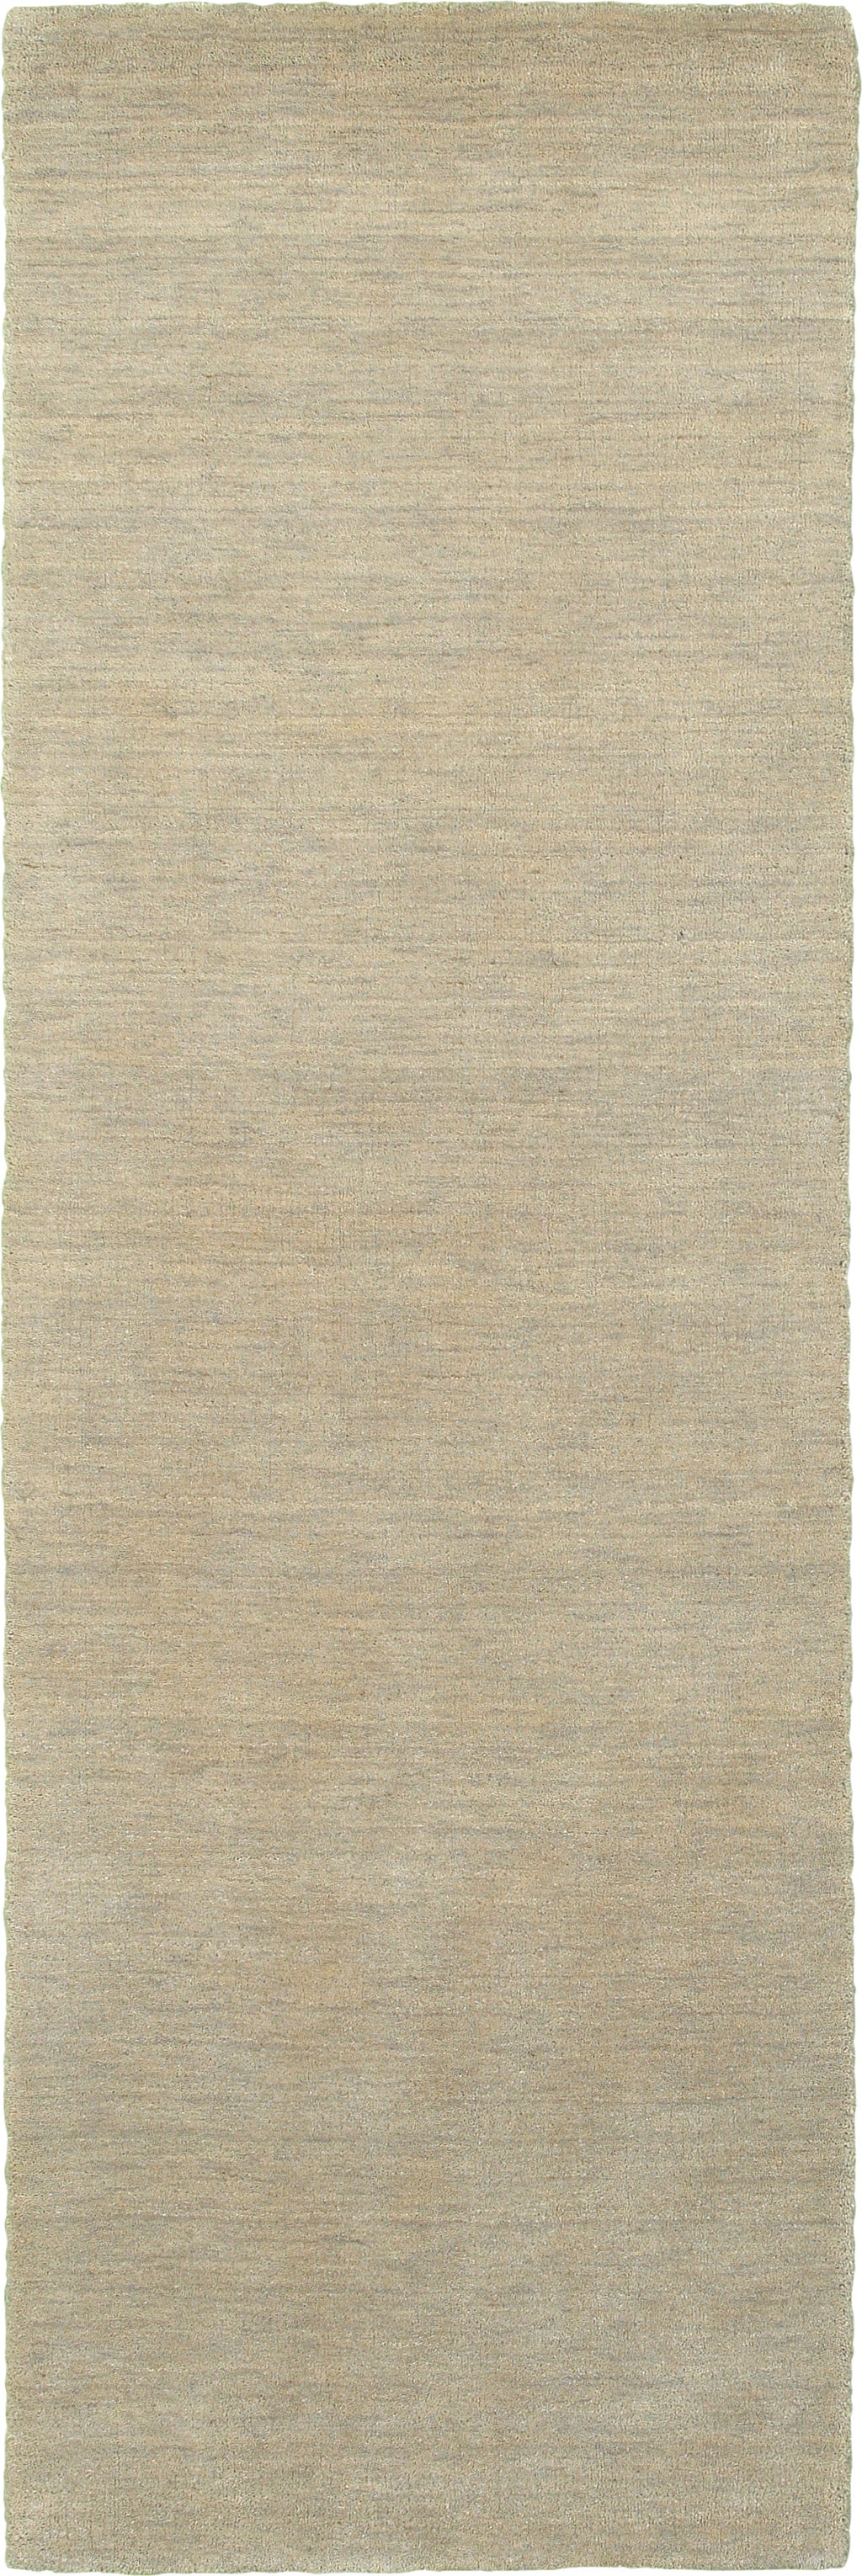 Oriental Weavers Aniston 27107 Beige/Beige Area Rug 2'6'' X 8' Runner Image